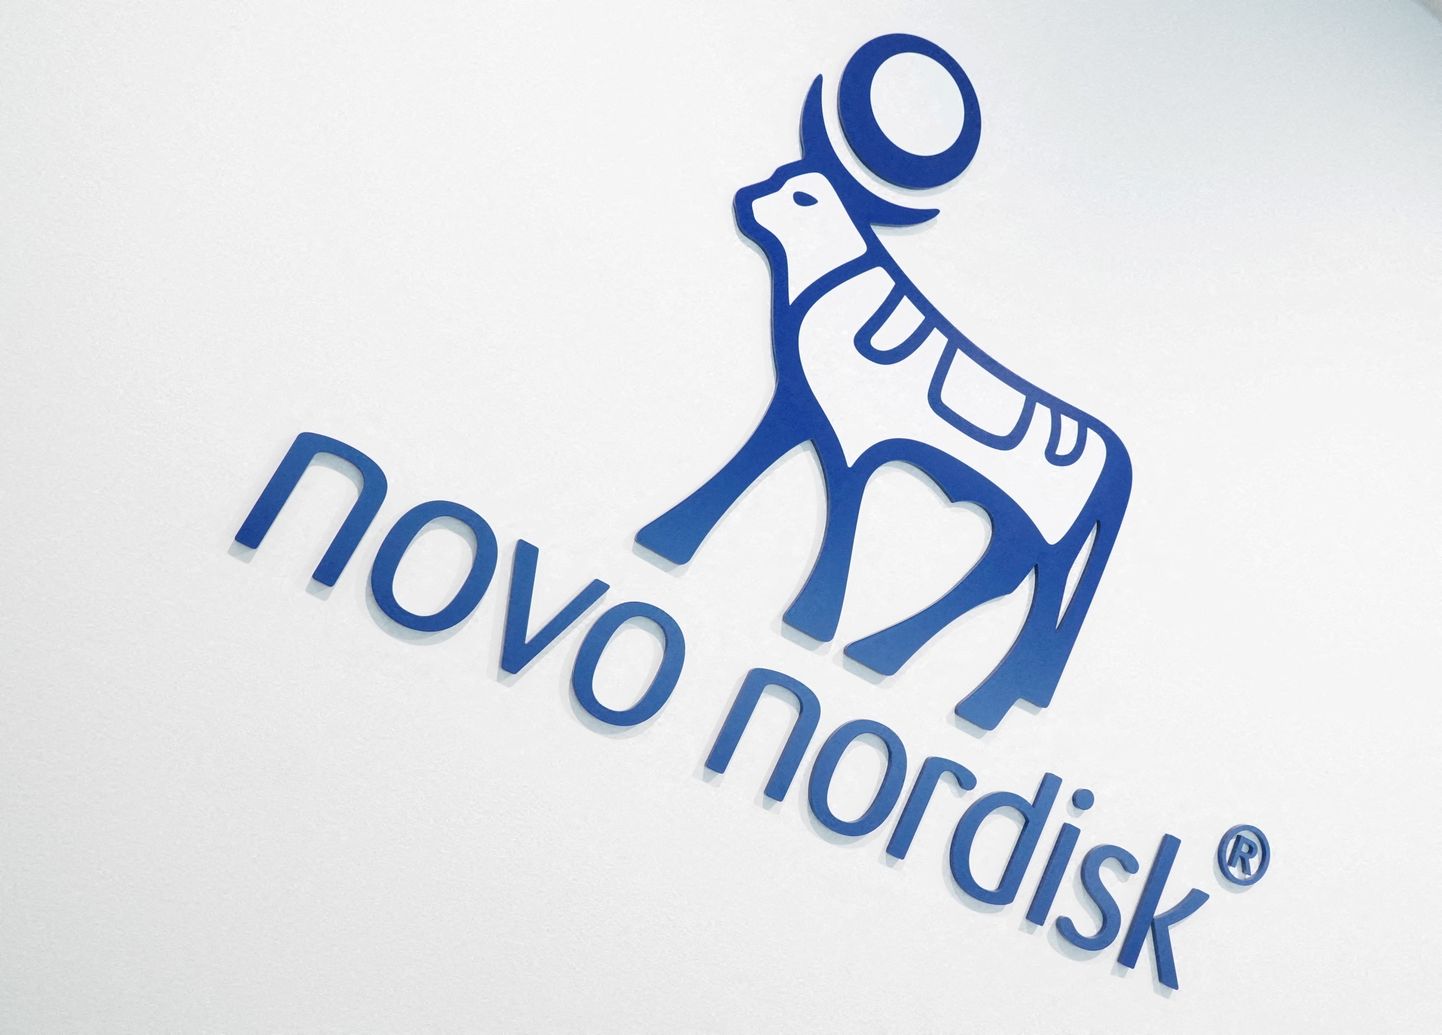 Taani ravimitootja Novo Nordiski logo.